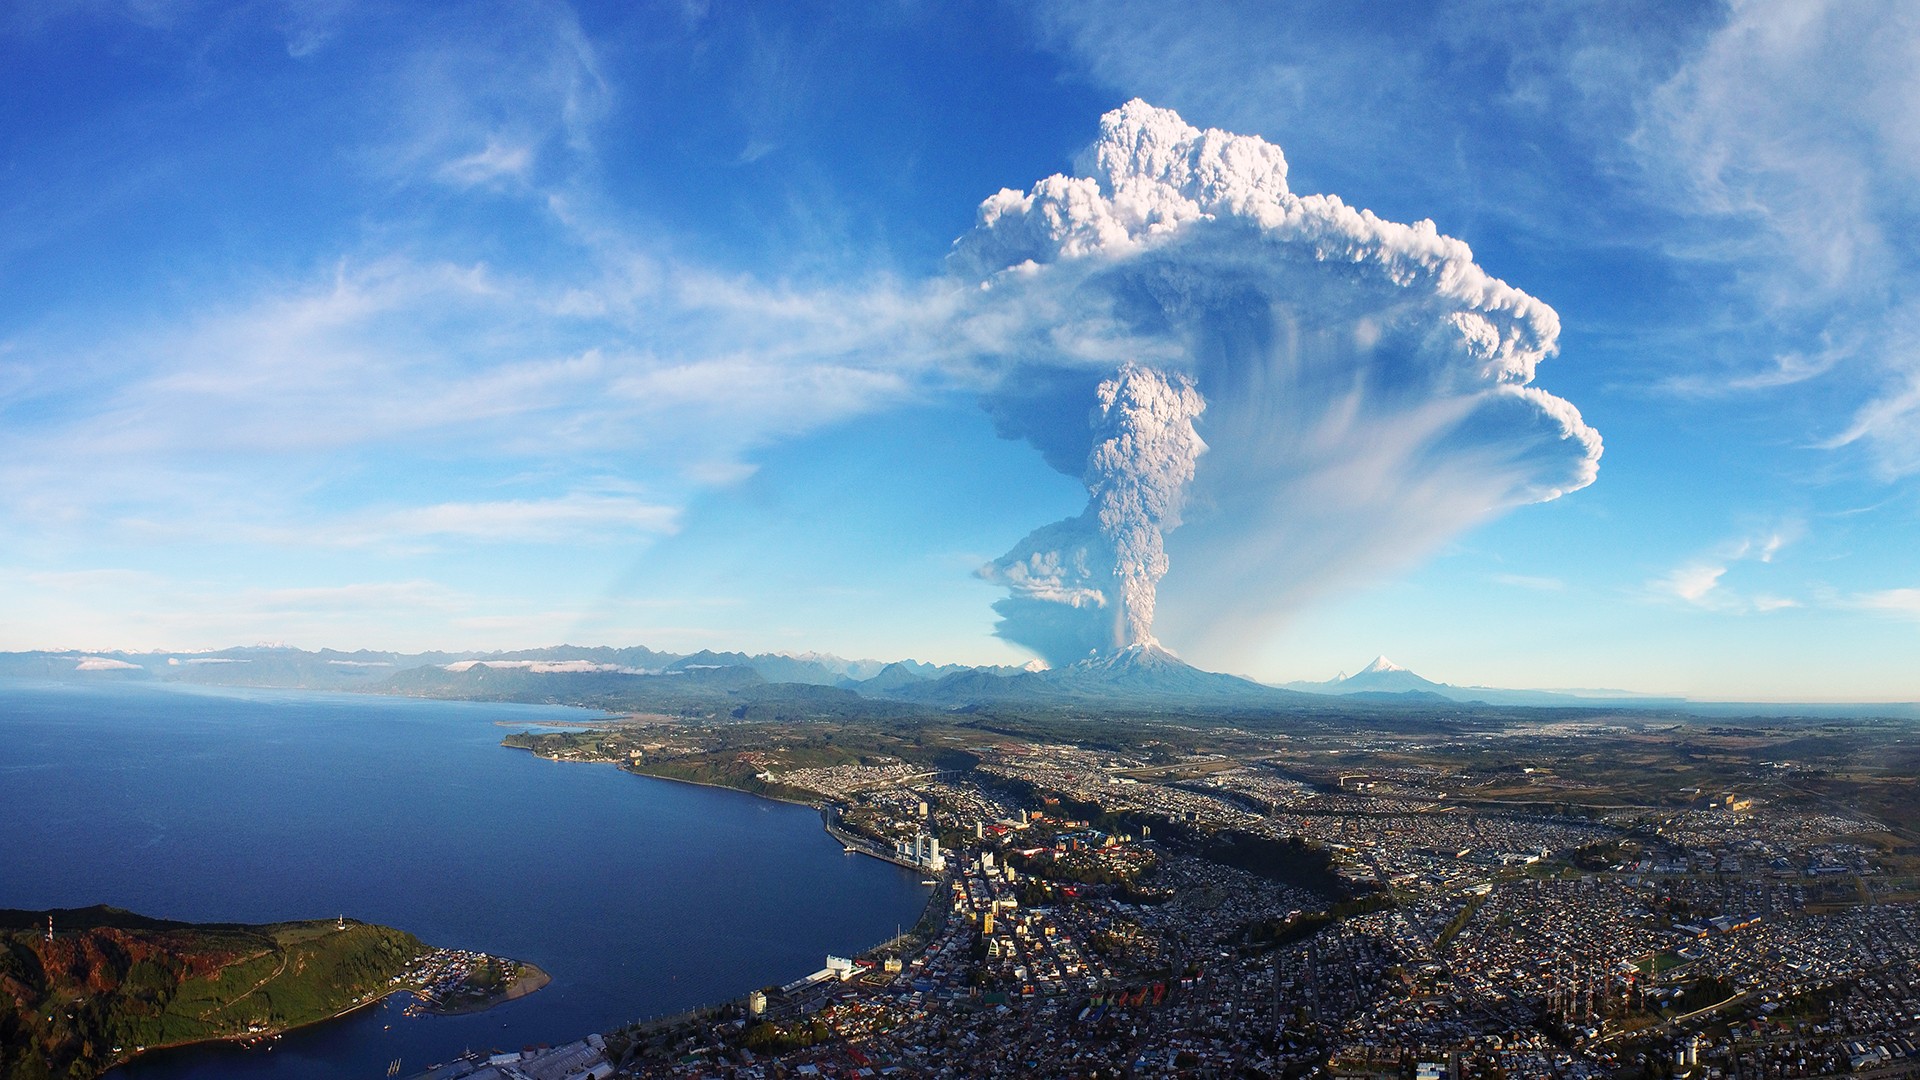 Chile Volcano Cityscape City Building Nature Eruption Smoke Mountains Snowy Peak Water Sea Hills Hou 1920x1080